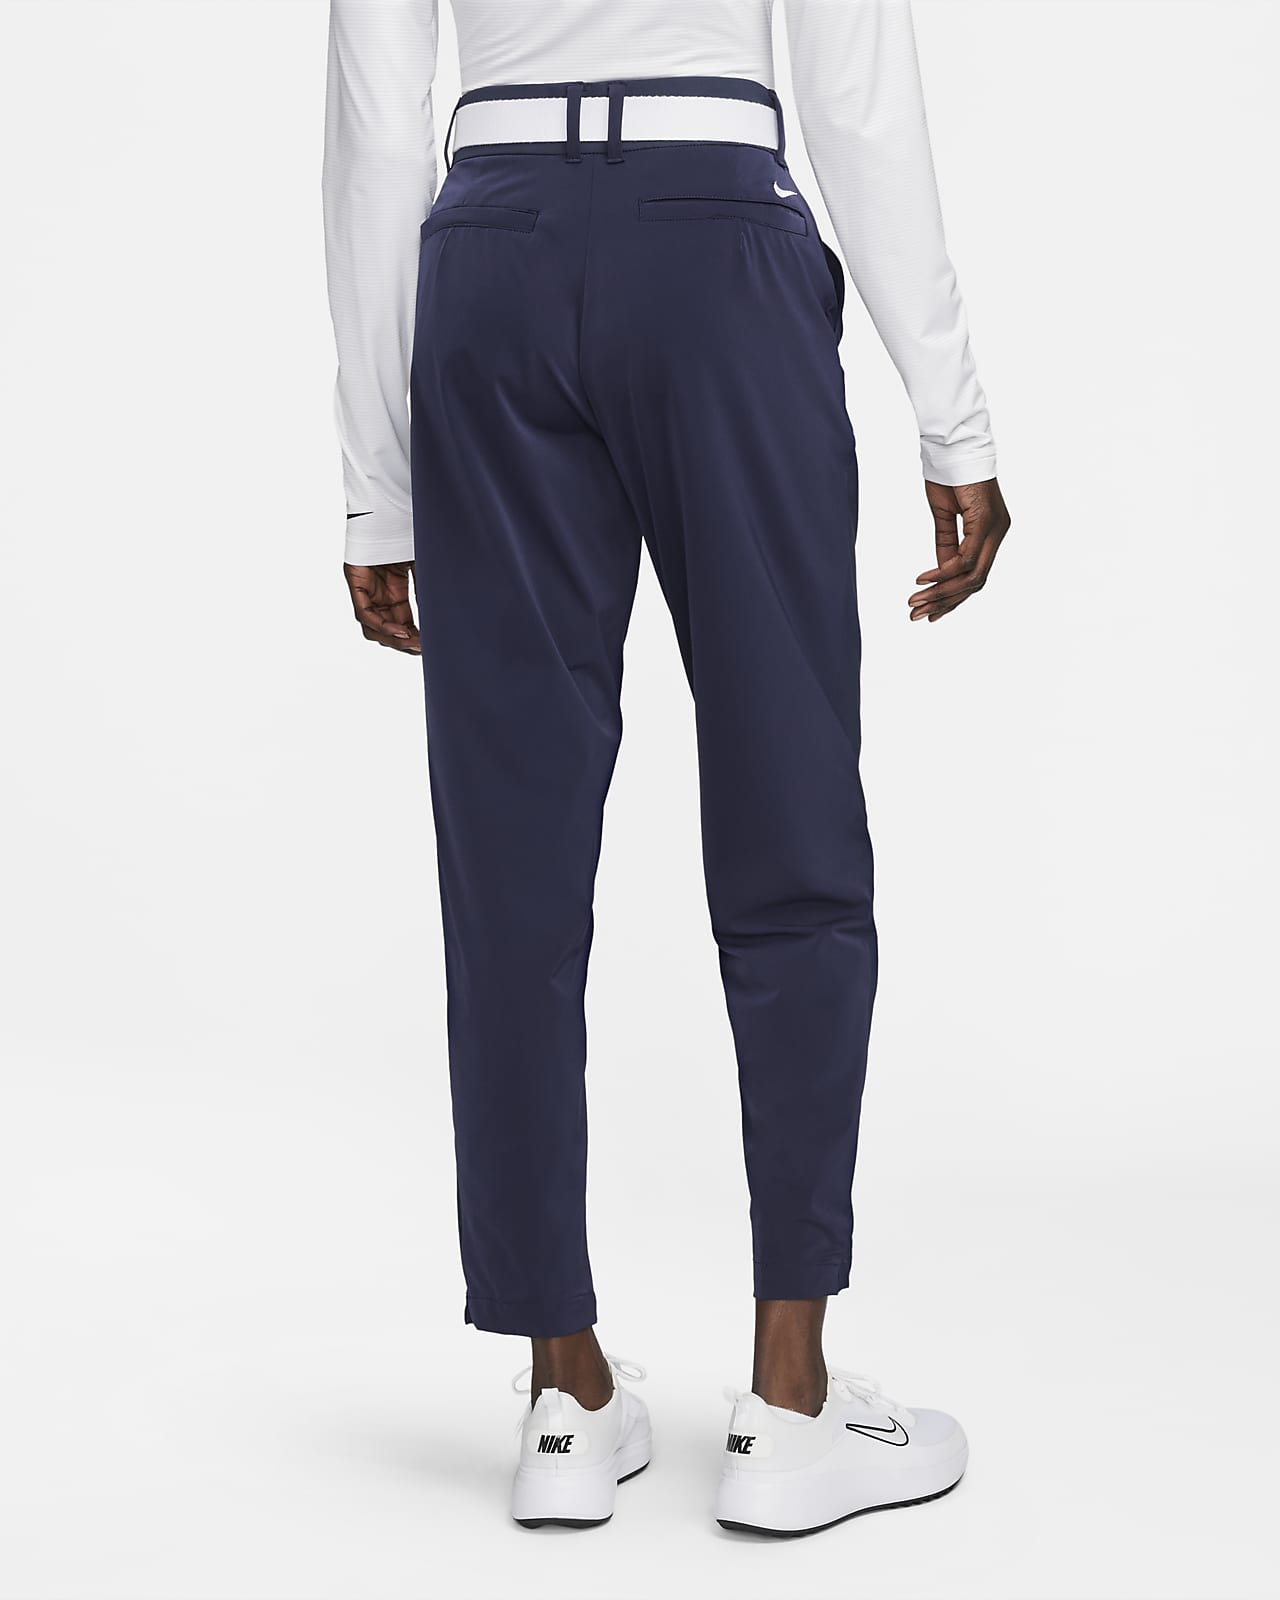 Nike Dri-FIT Women's Golf Pants.